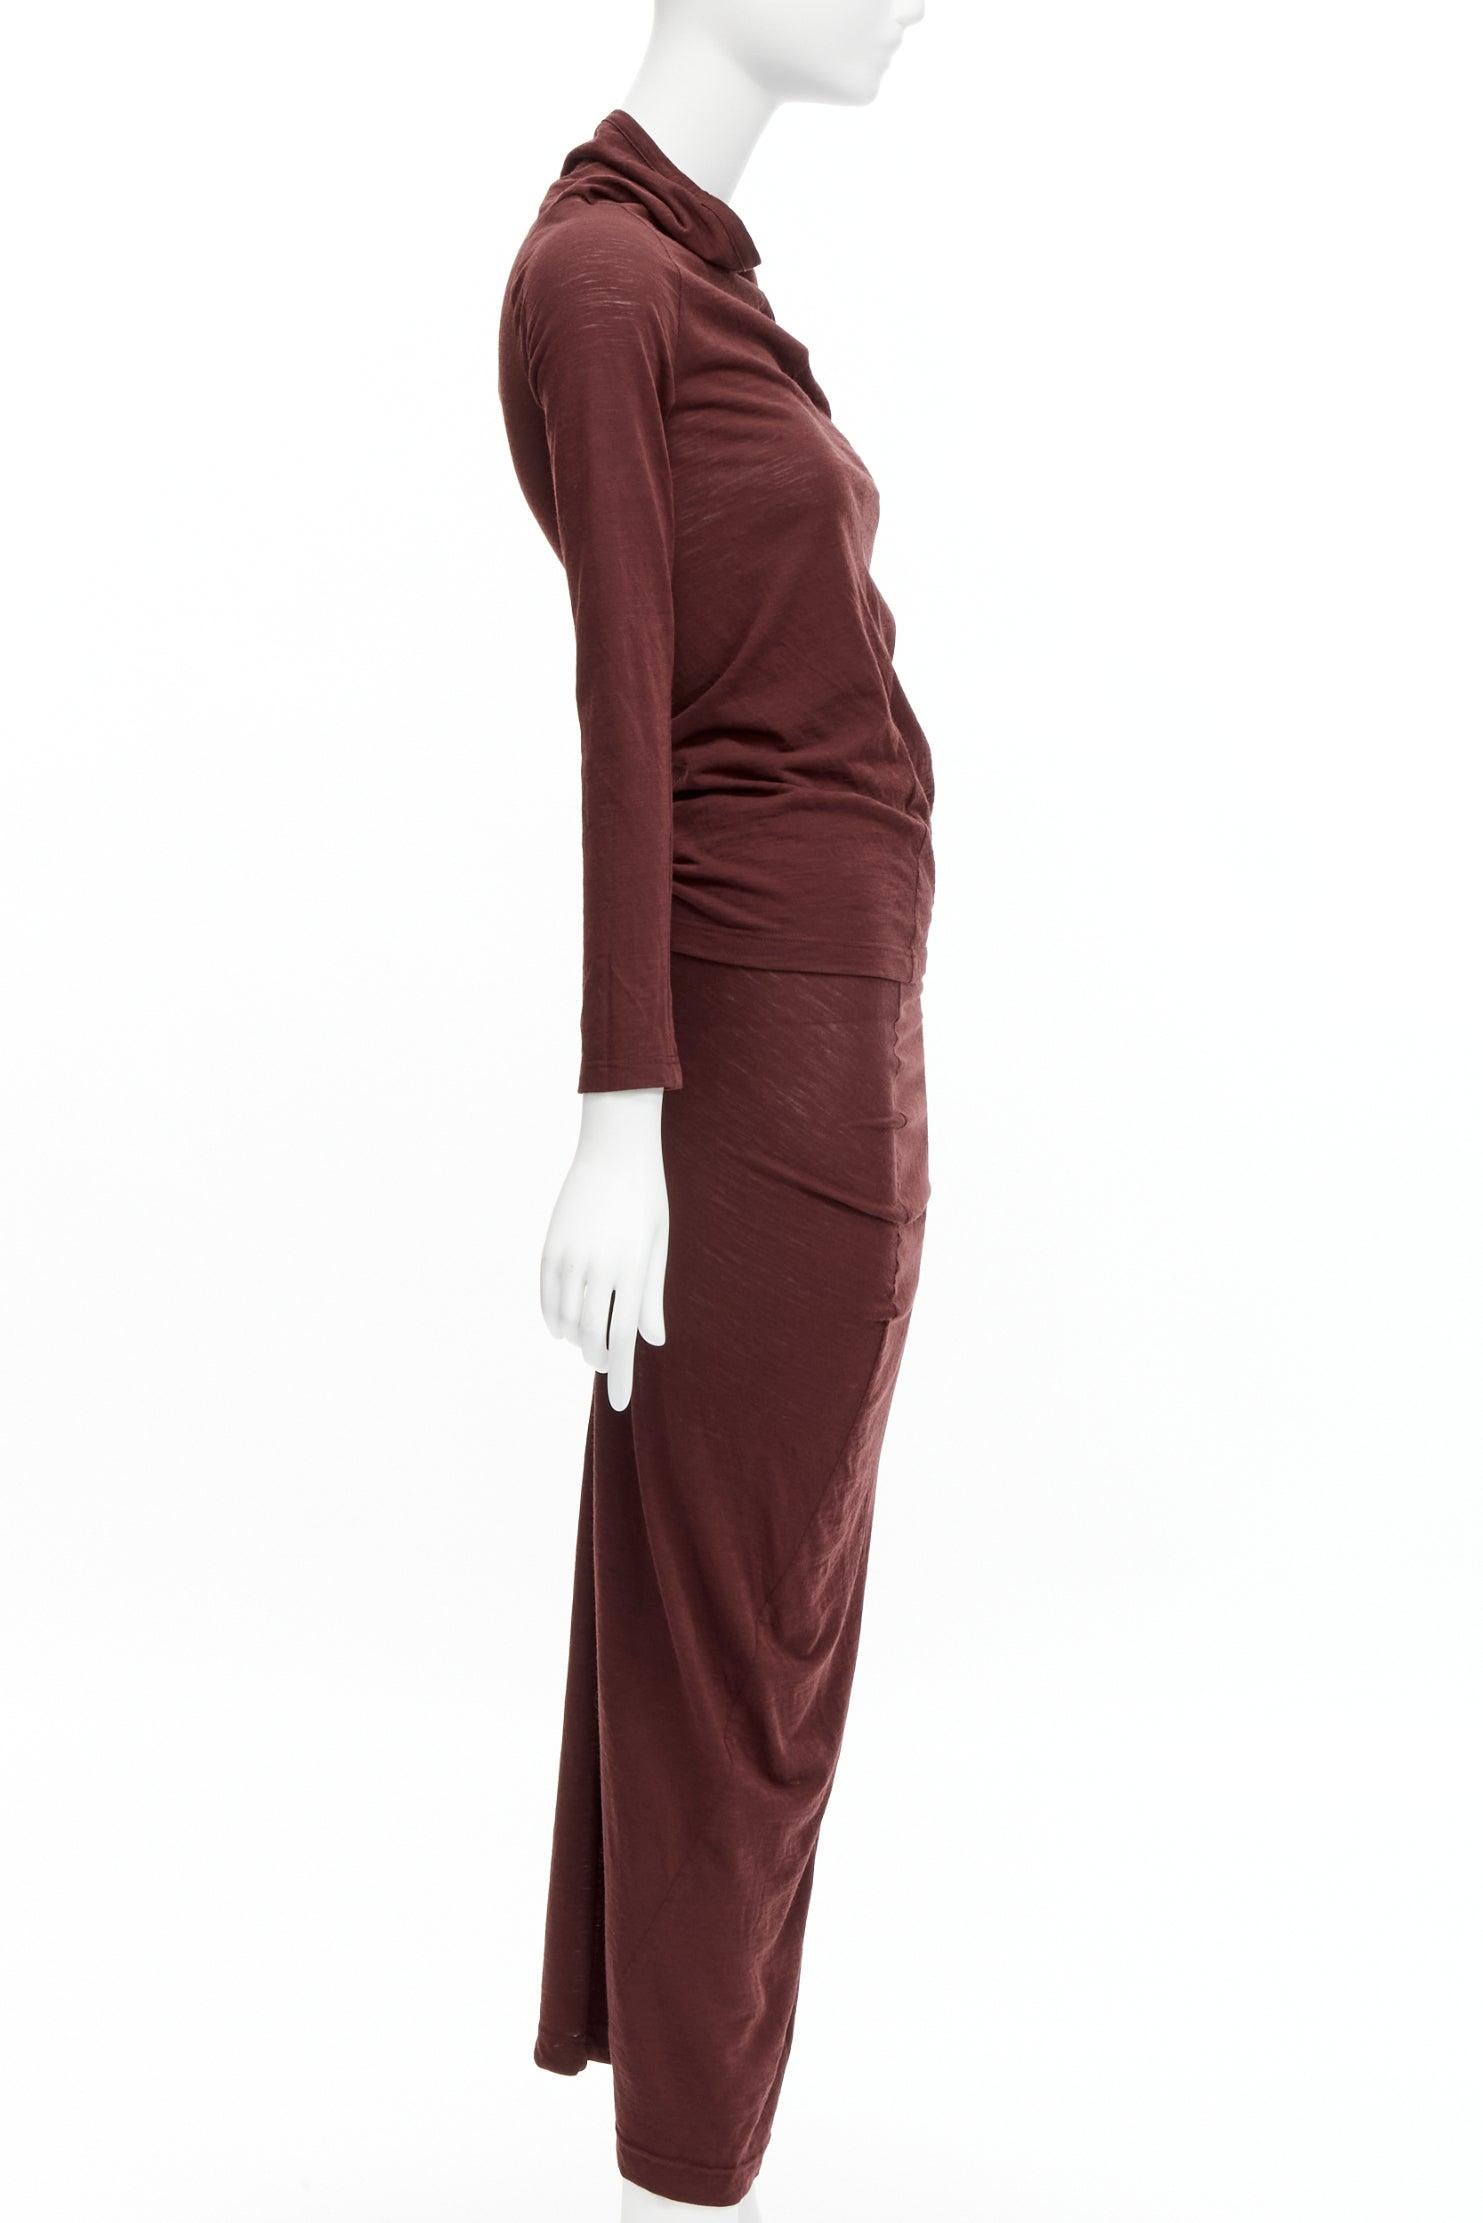 Women's CDG COMME DES GARCONS burgundy brown bias cut stretch top midi skirt set S For Sale